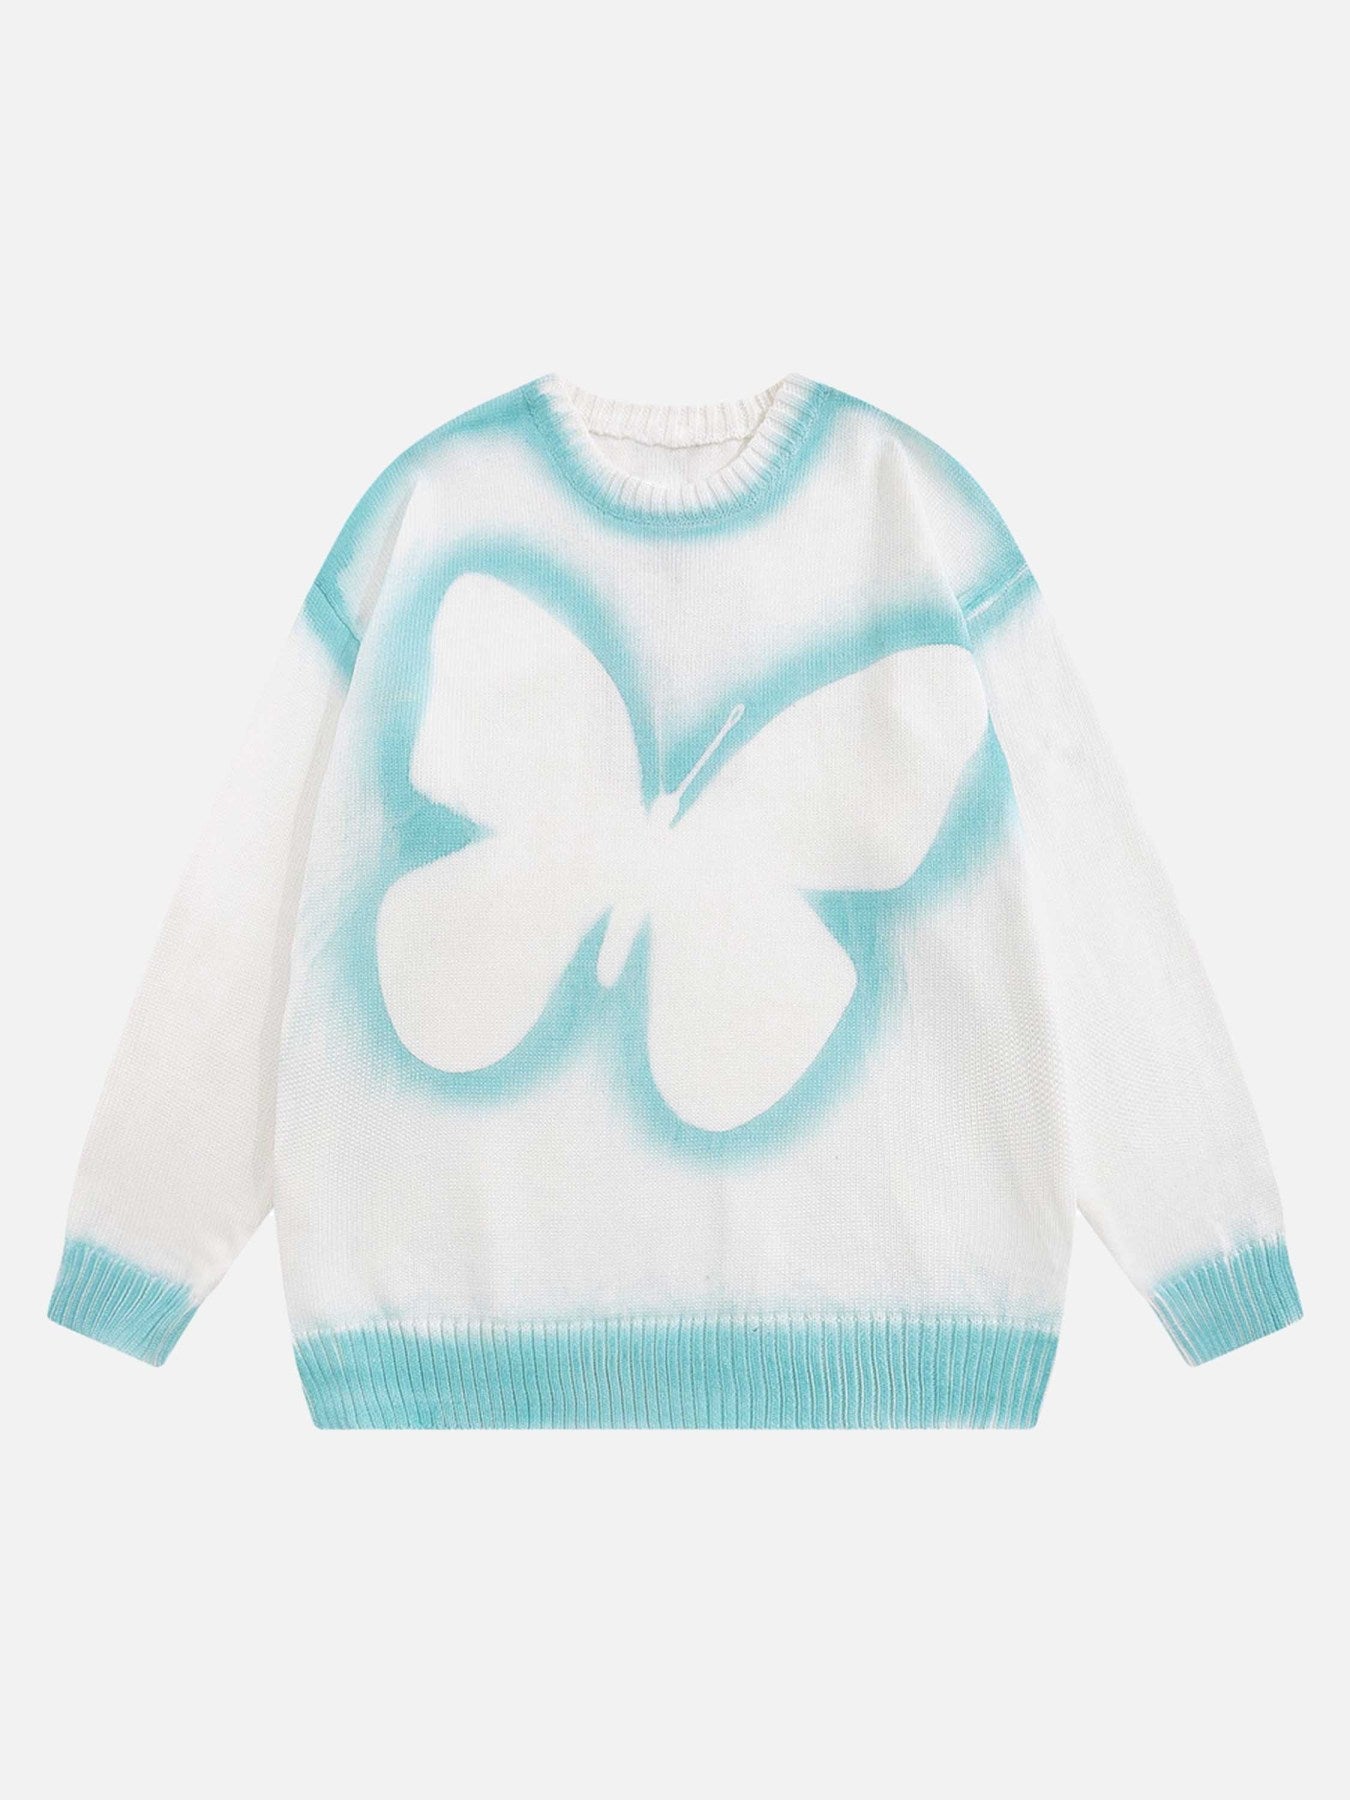 Thesupermade Butterfly Airbrush Graffiti Sweater